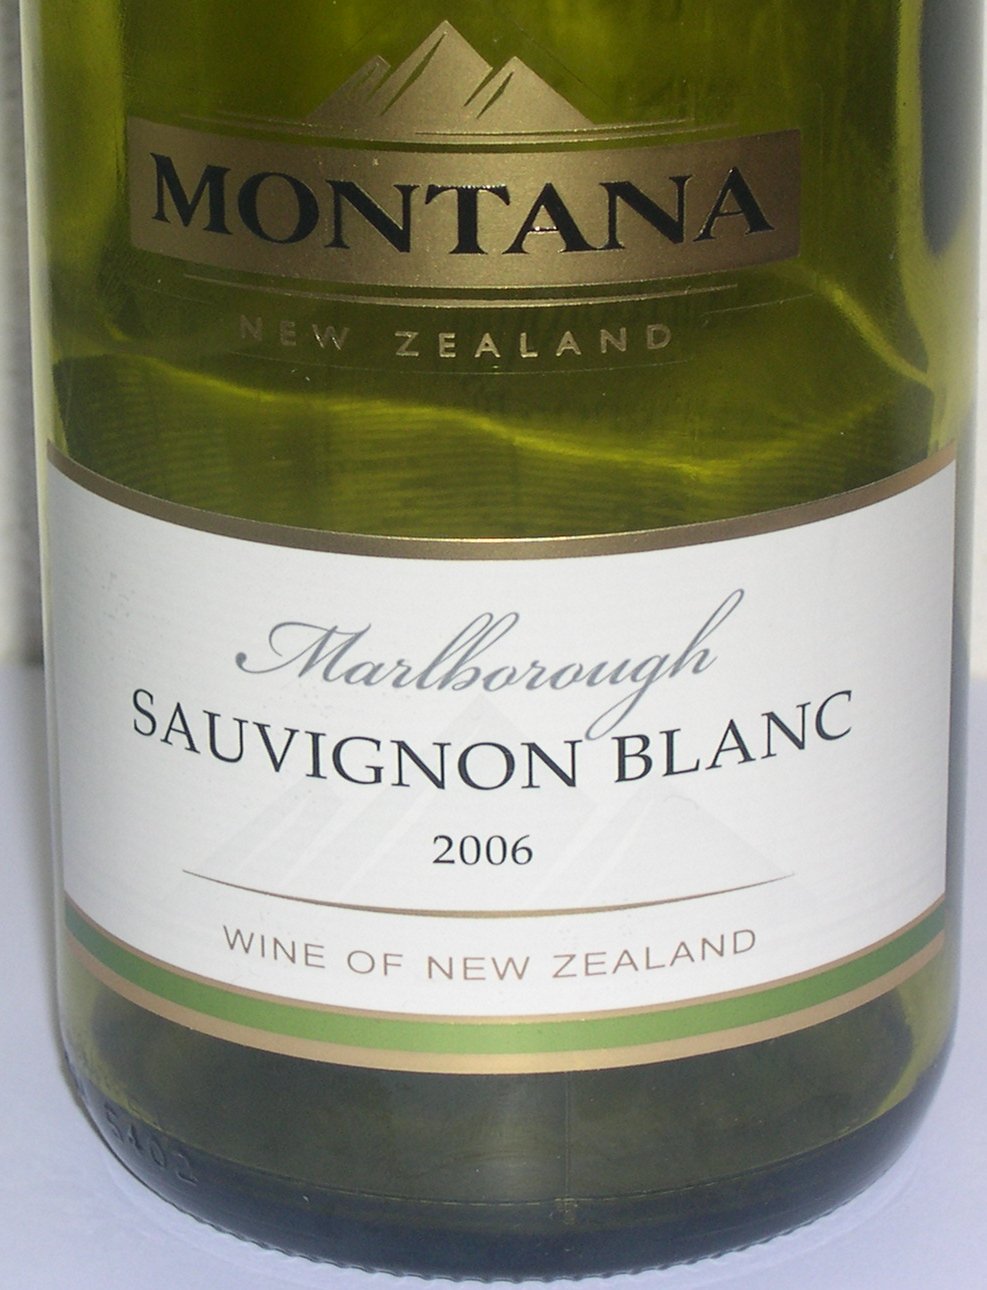 Marlborough Sauvignon blanc 2006, Montana Wines Ltd, New Zealand